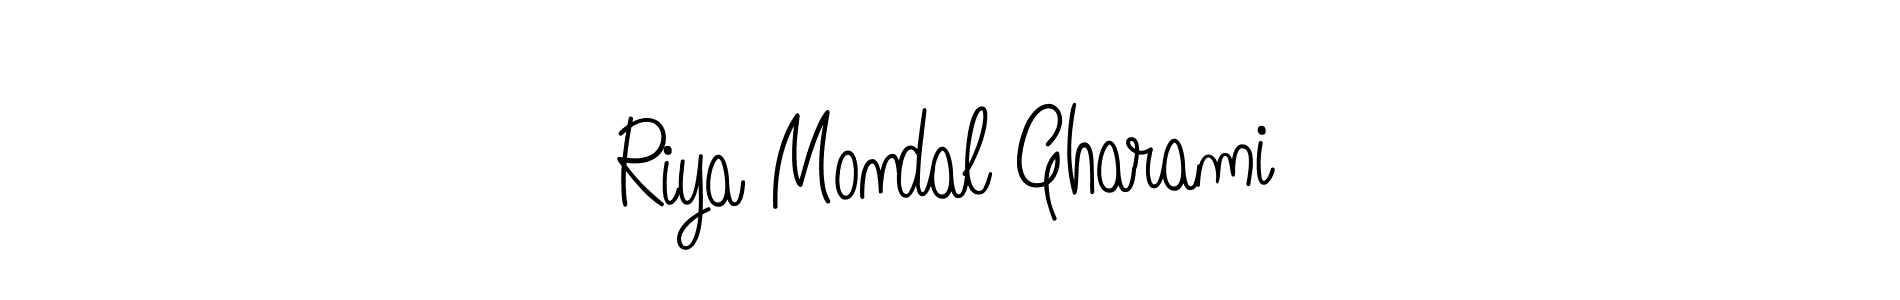 Make a beautiful signature design for name Riya Mondal Gharami. Use this online signature maker to create a handwritten signature for free. Riya Mondal Gharami signature style 5 images and pictures png